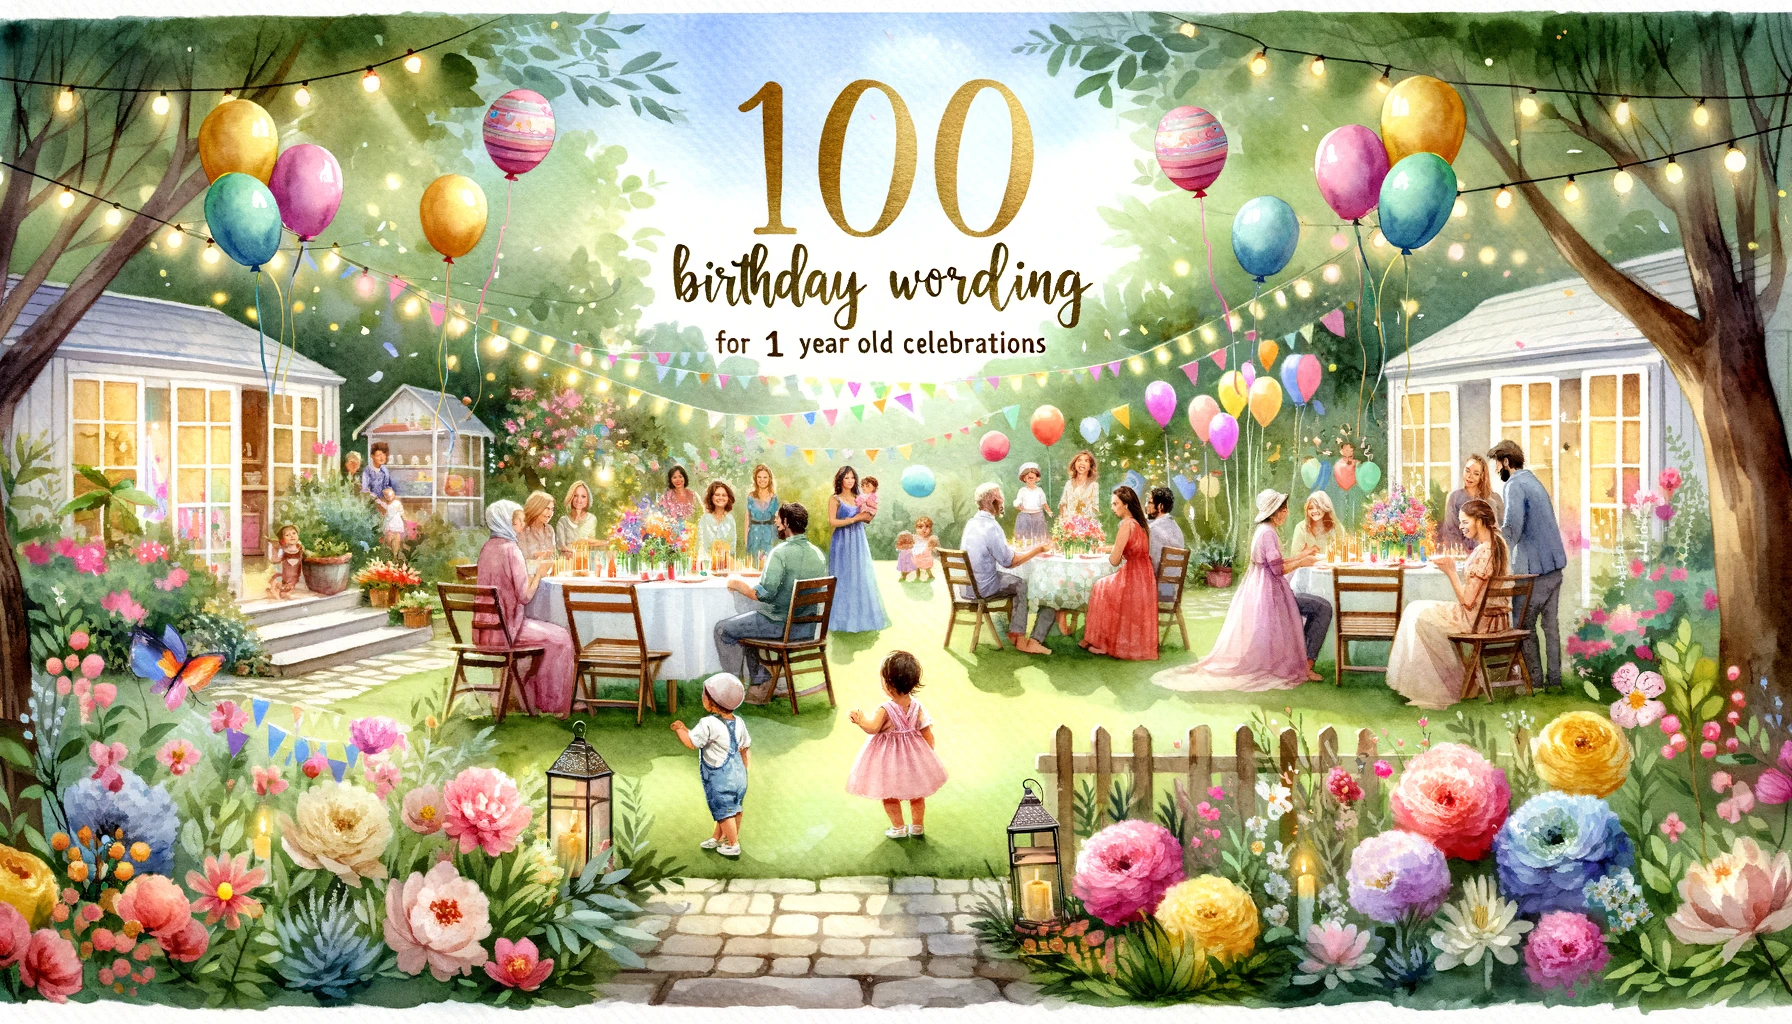 100 Birthday Invitation Wording for 1 Year Old Celebrations